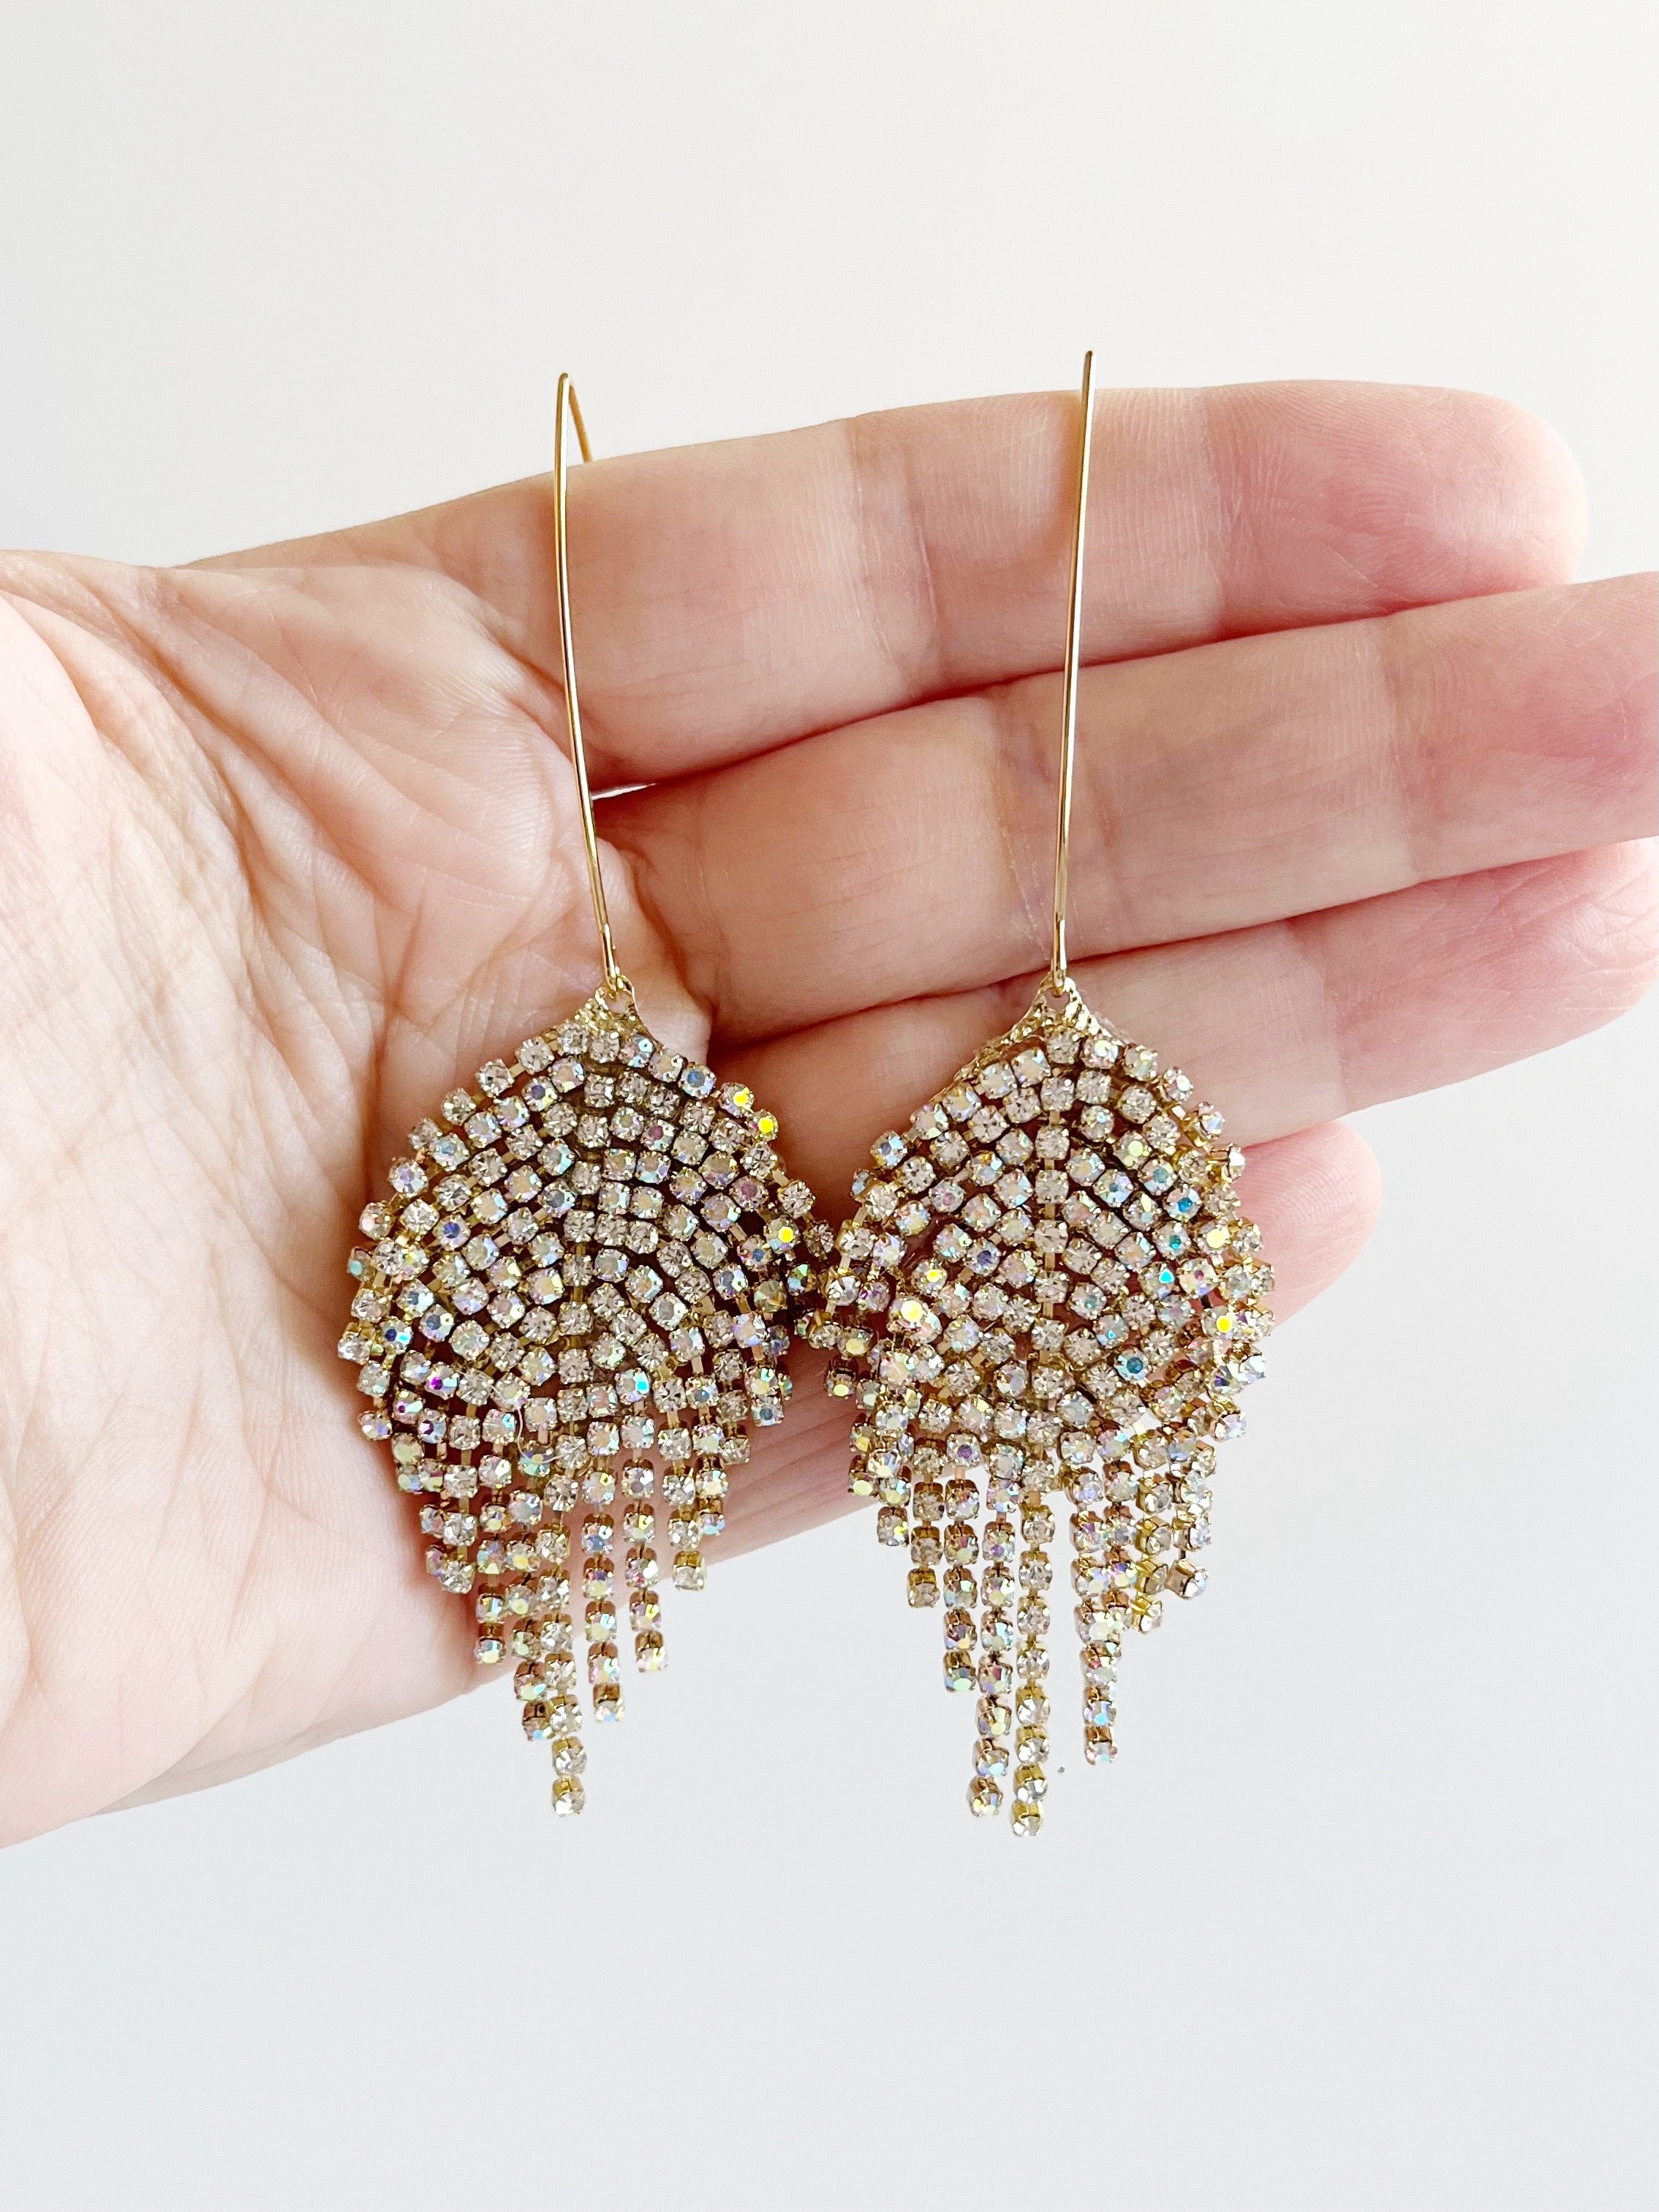 crystal pendant earrings displayed on hand